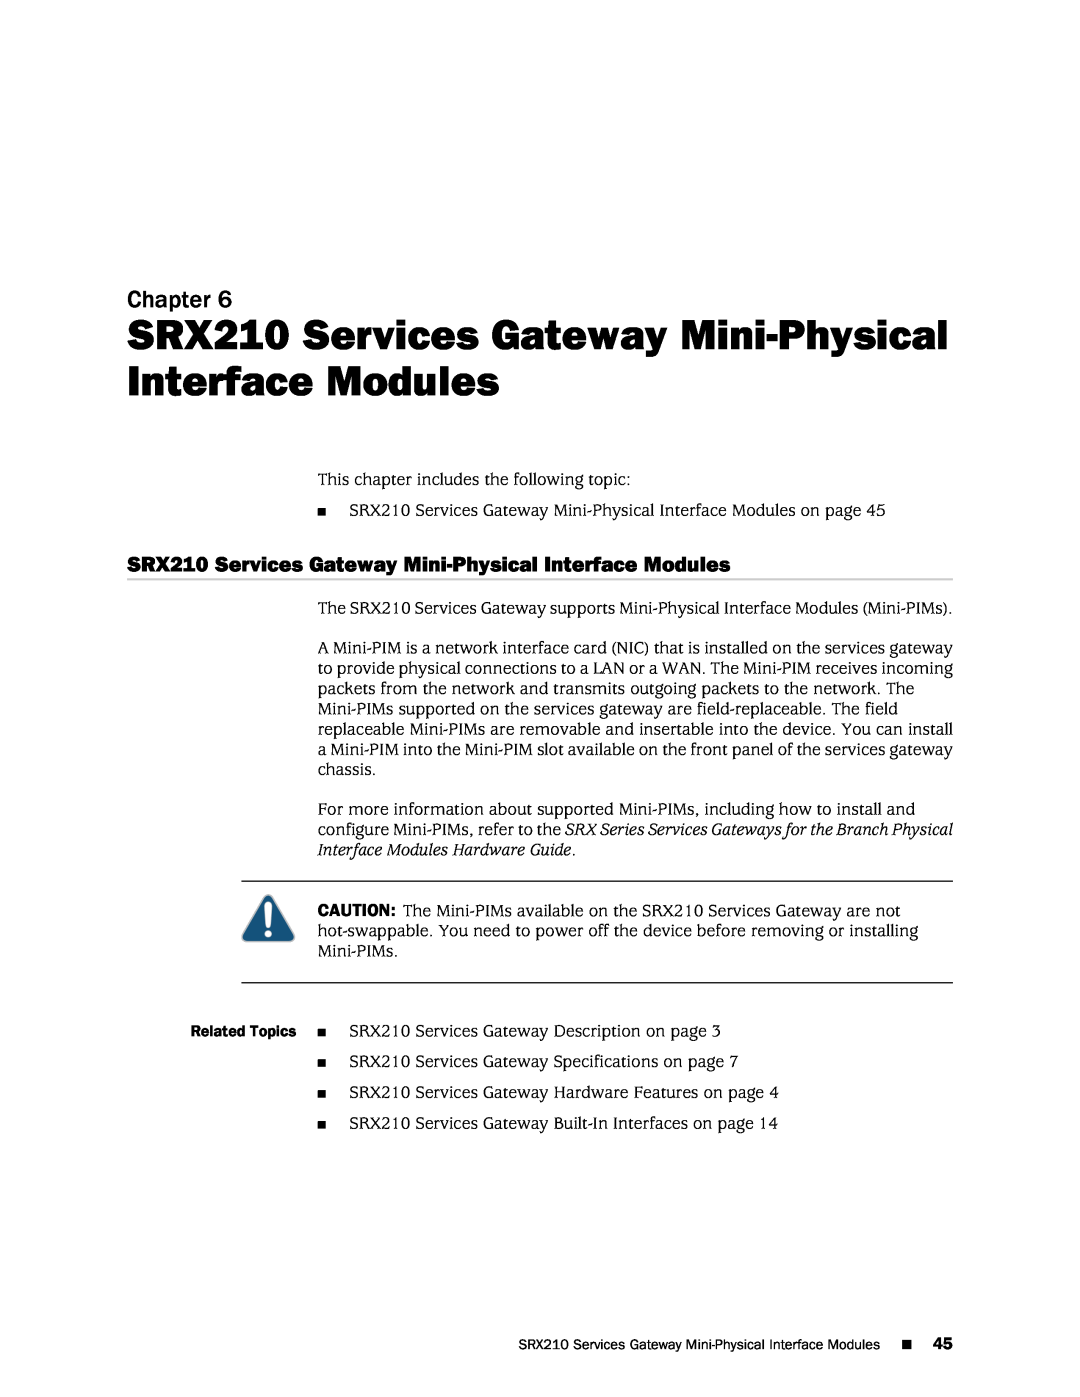 Juniper Networks SRX 210 manual SRX210 Services Gateway Mini-Physical Interface Modules, Chapter 